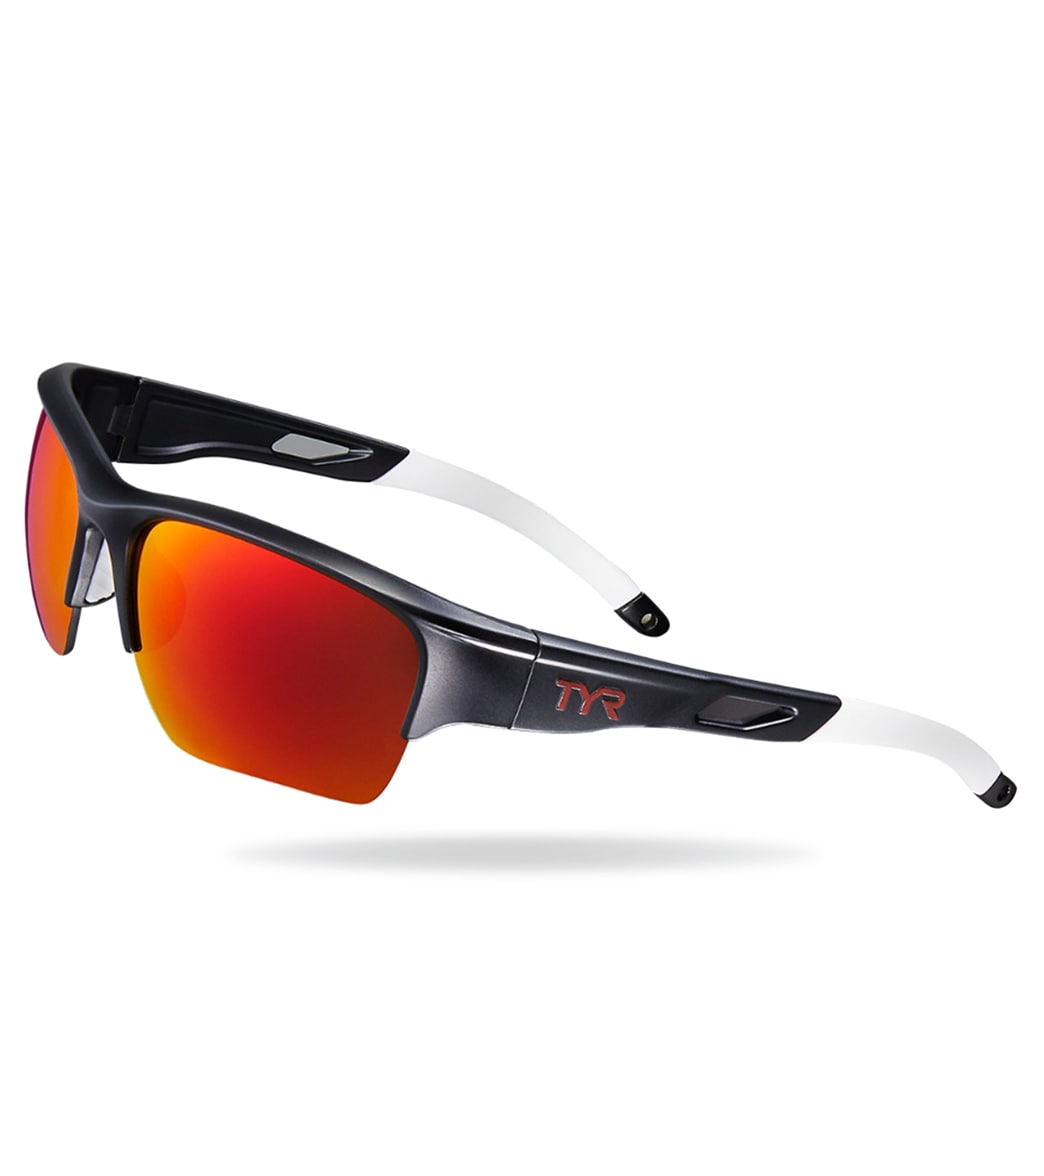 TYR Men's Vatcher Performance Sunglasses - Red/Black - Swimoutlet.com